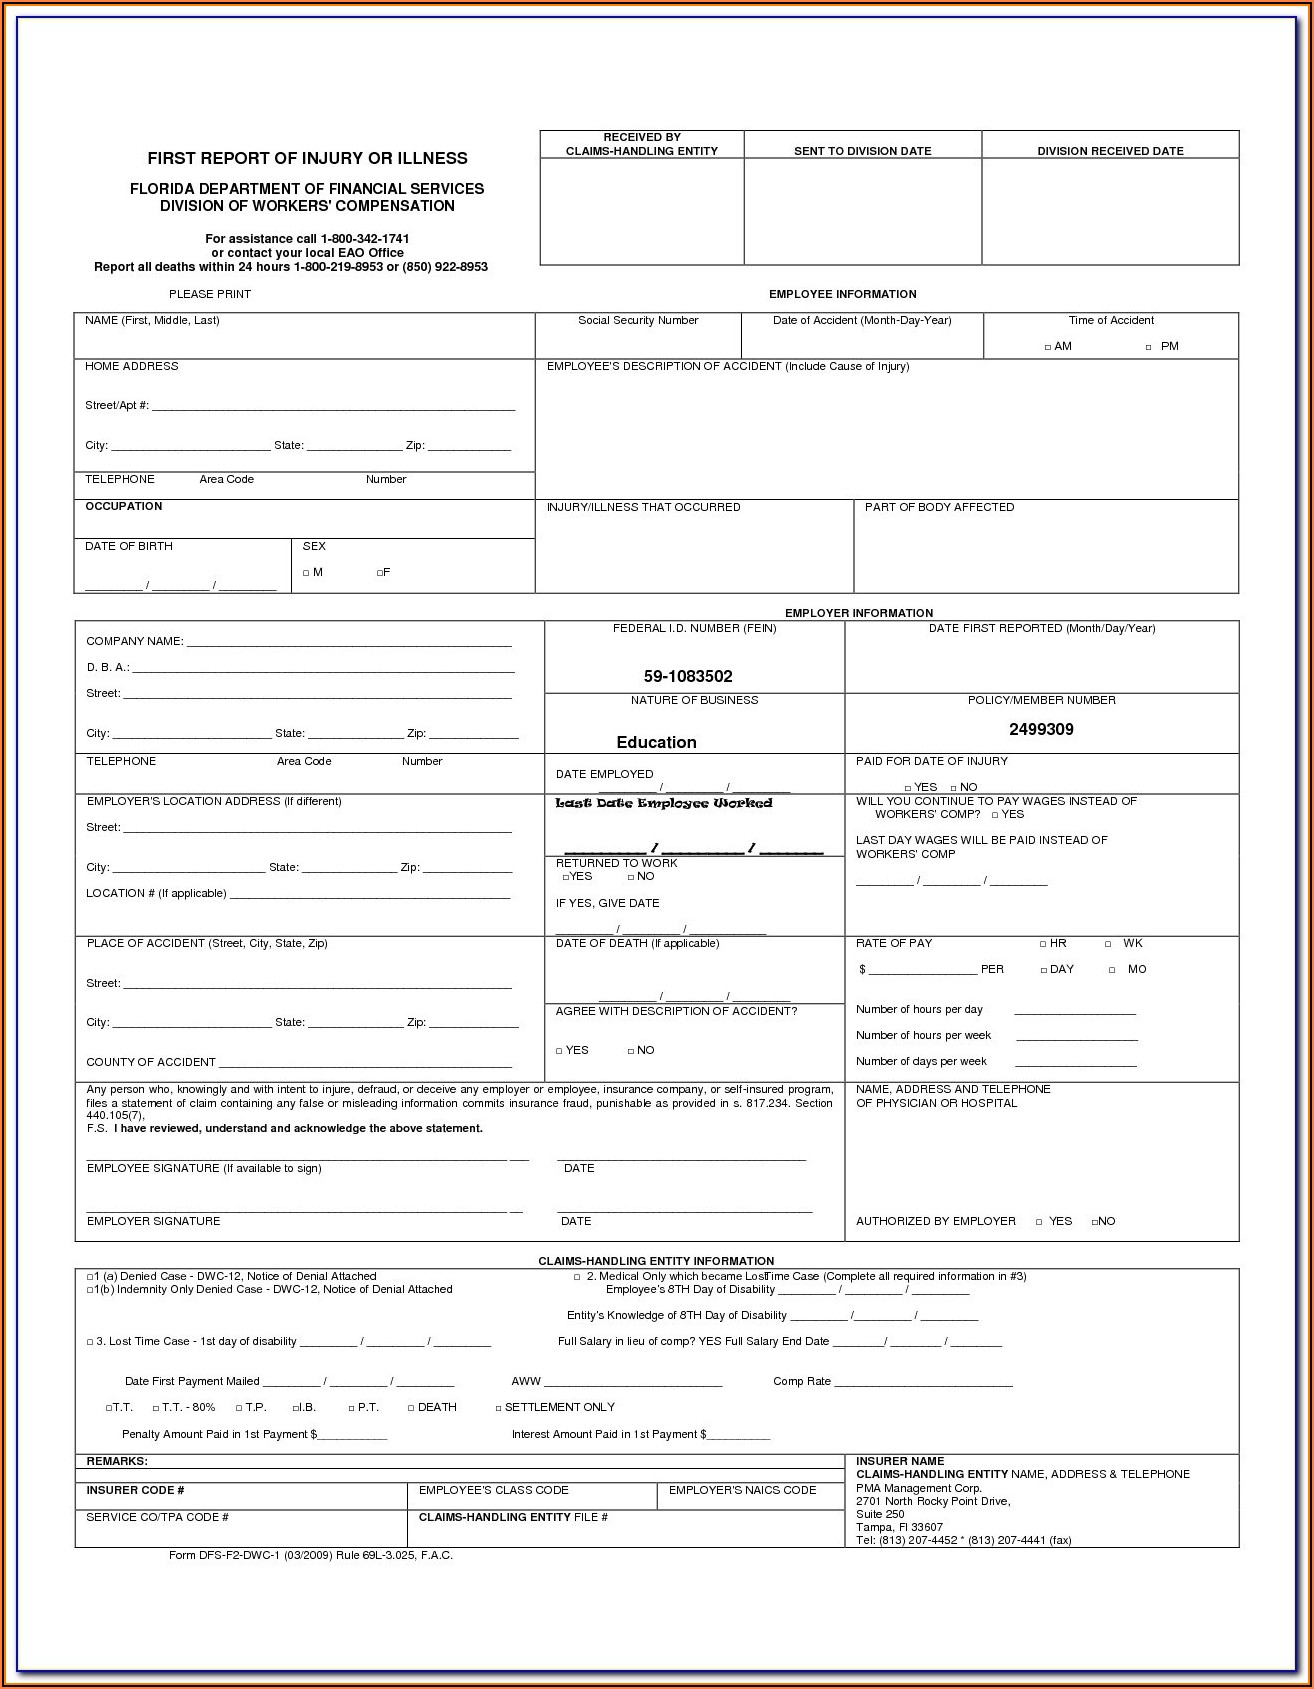 Aarp Pre Authorization Form